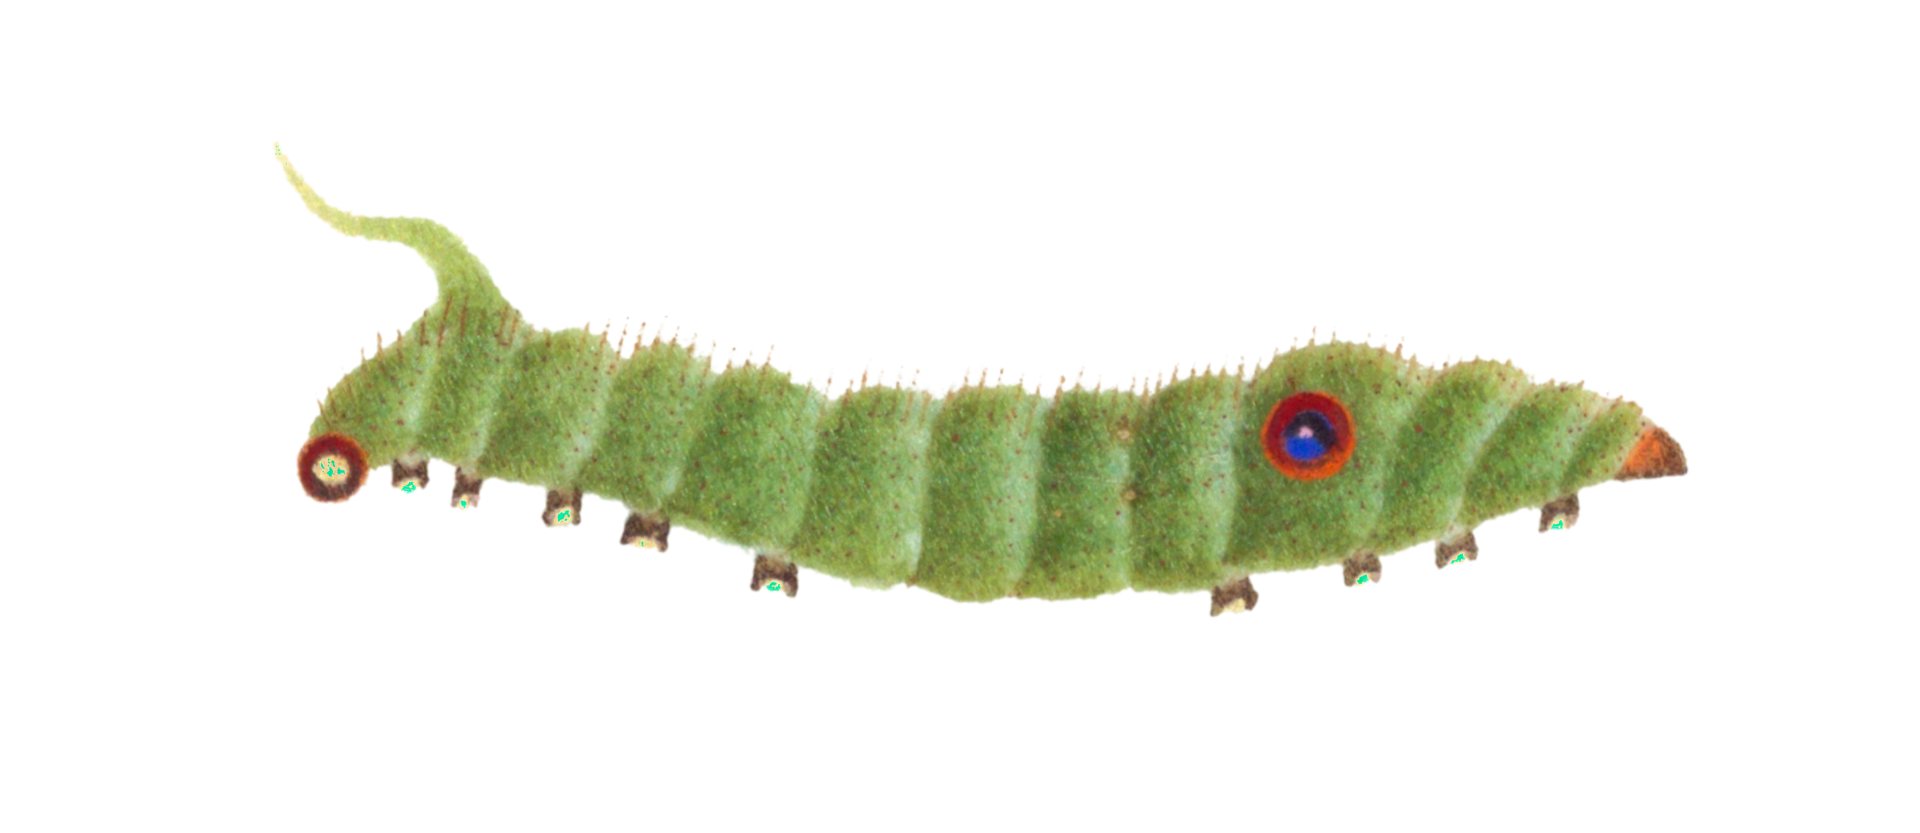 Antiopa蝴蝶毛虫nymphalis 库存图片. 图片 包括有 阶段, 转换, 动物区系, 头发, 昆虫 - 631915